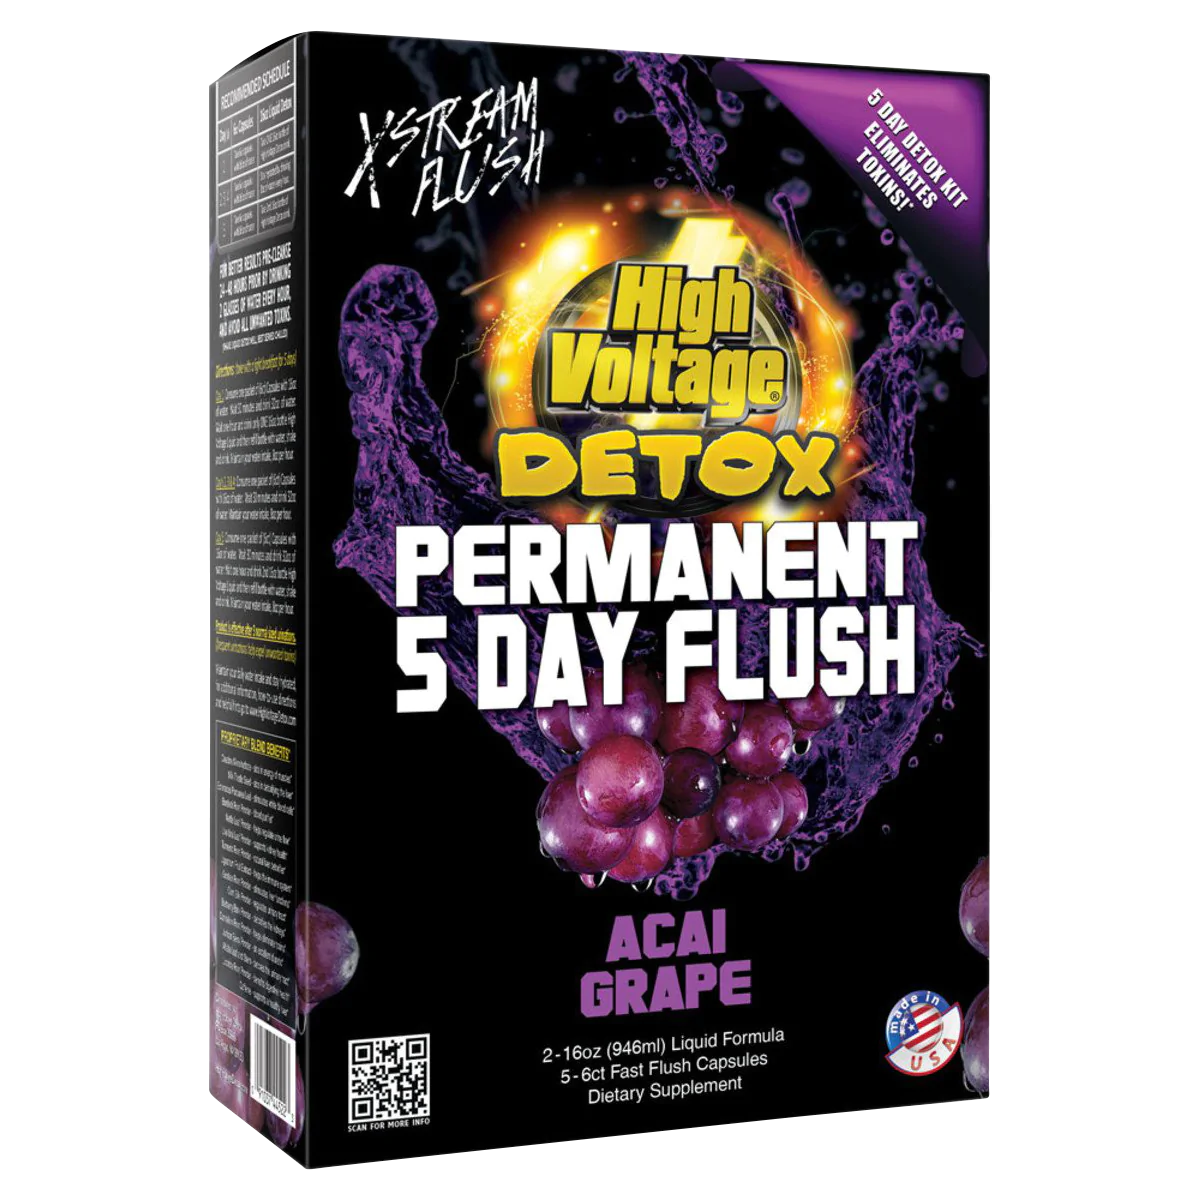 High Voltage Detox Permanent 5 Day Flush in Acai Grape flavor - Front View